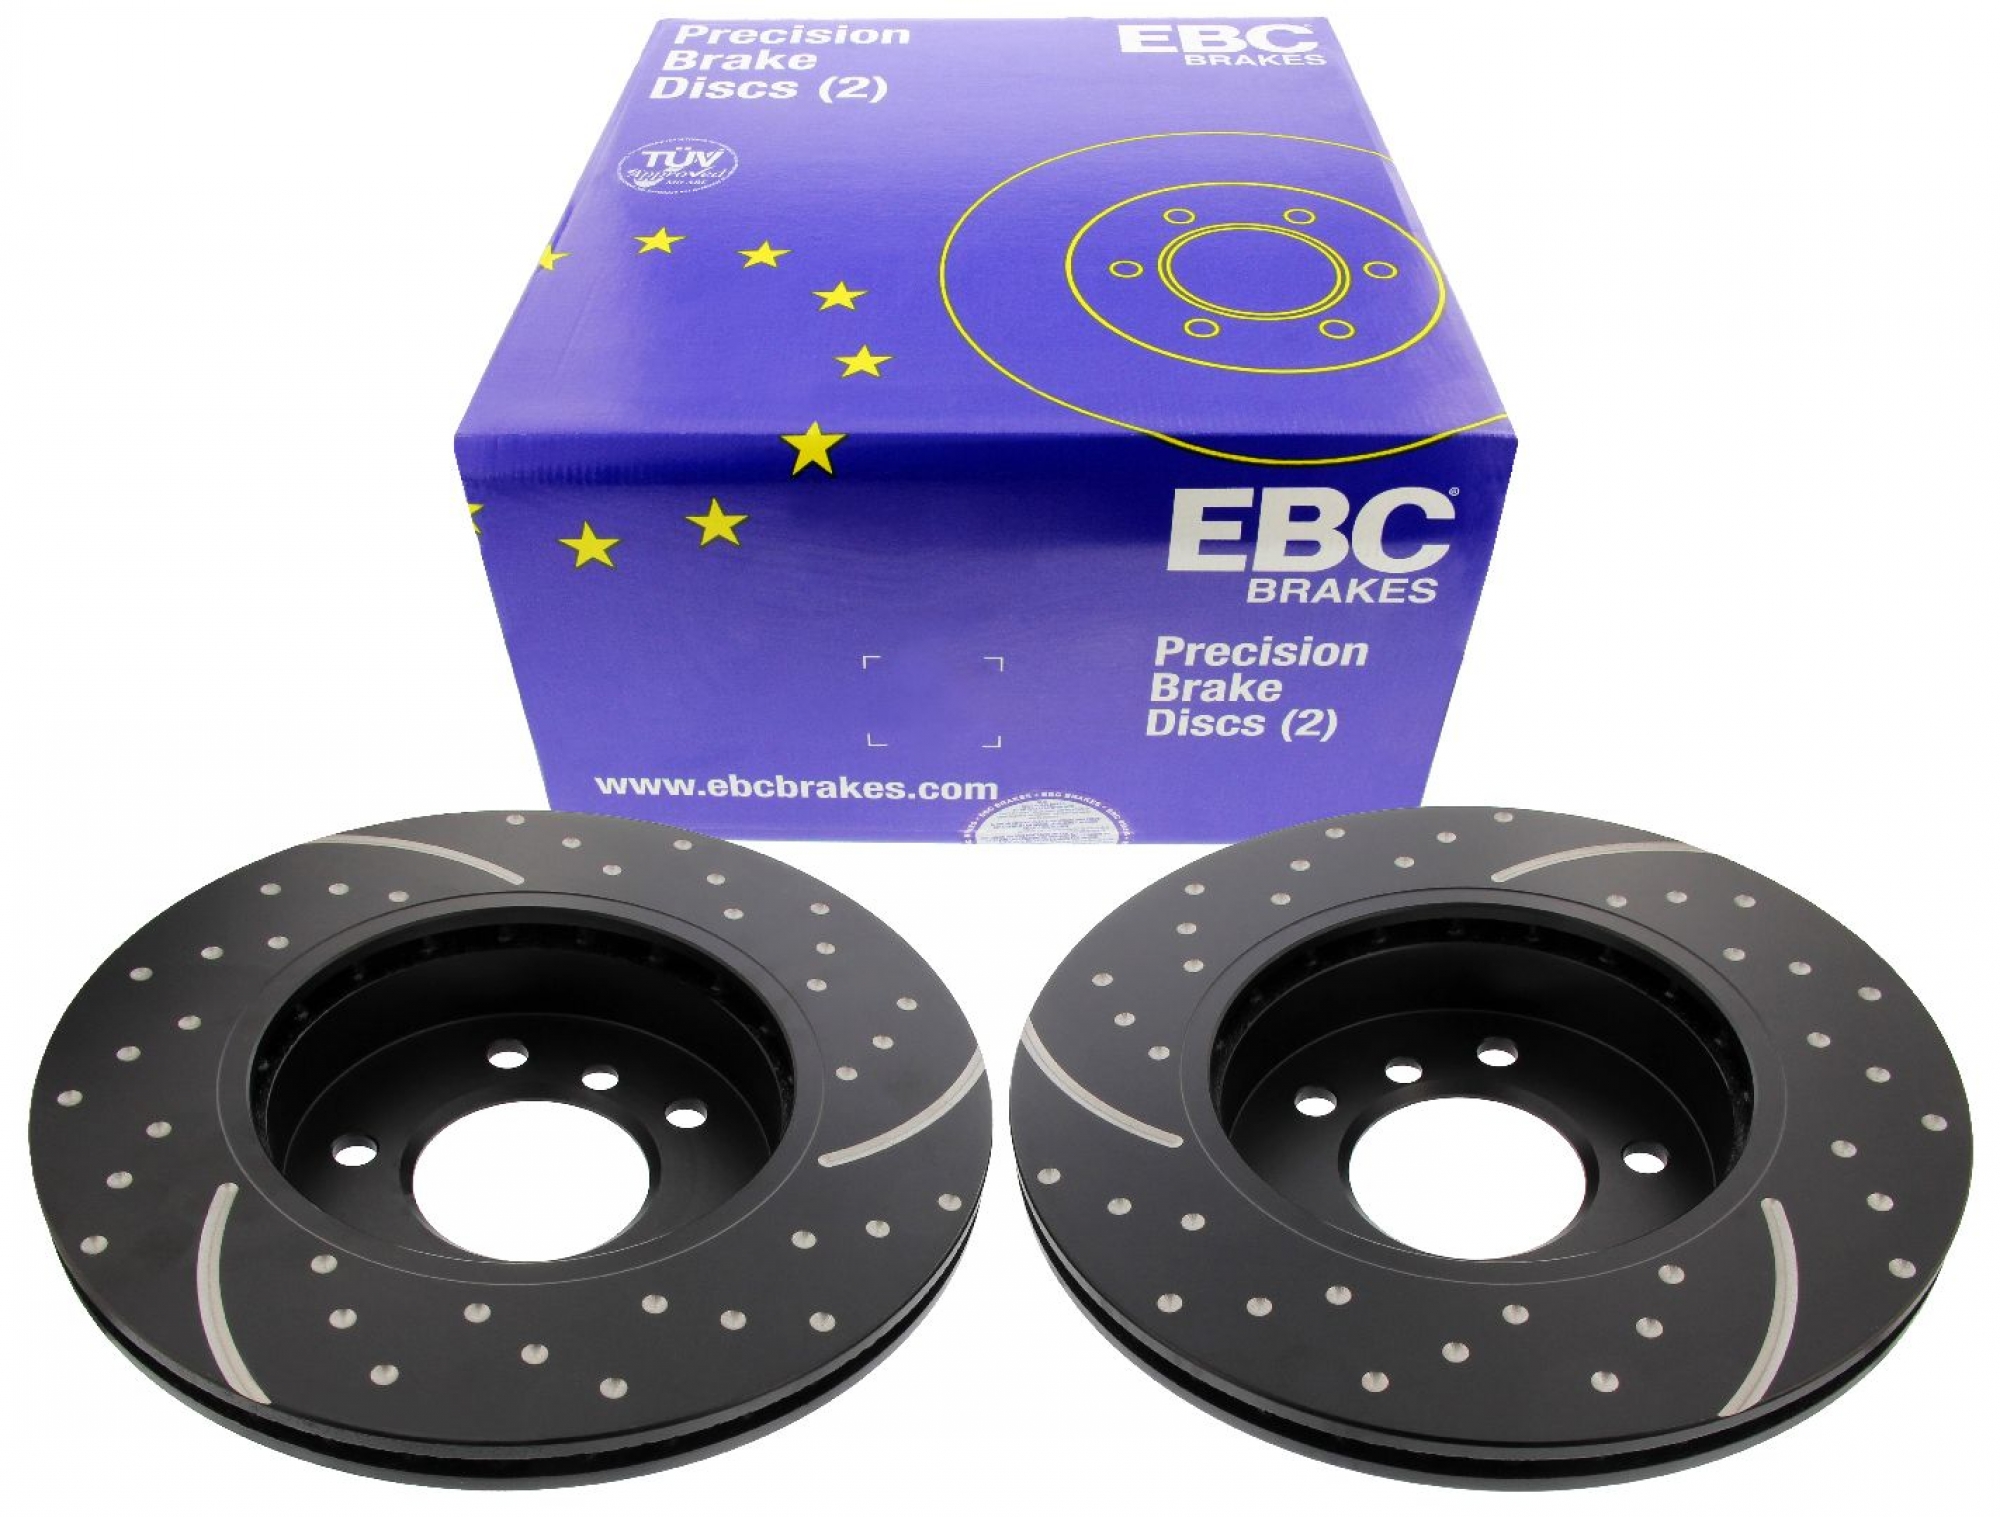 EBC-Bremsscheiben, Turbo Groove Disc Black (2-teilig), VA, BMW Z3, Z4, 3